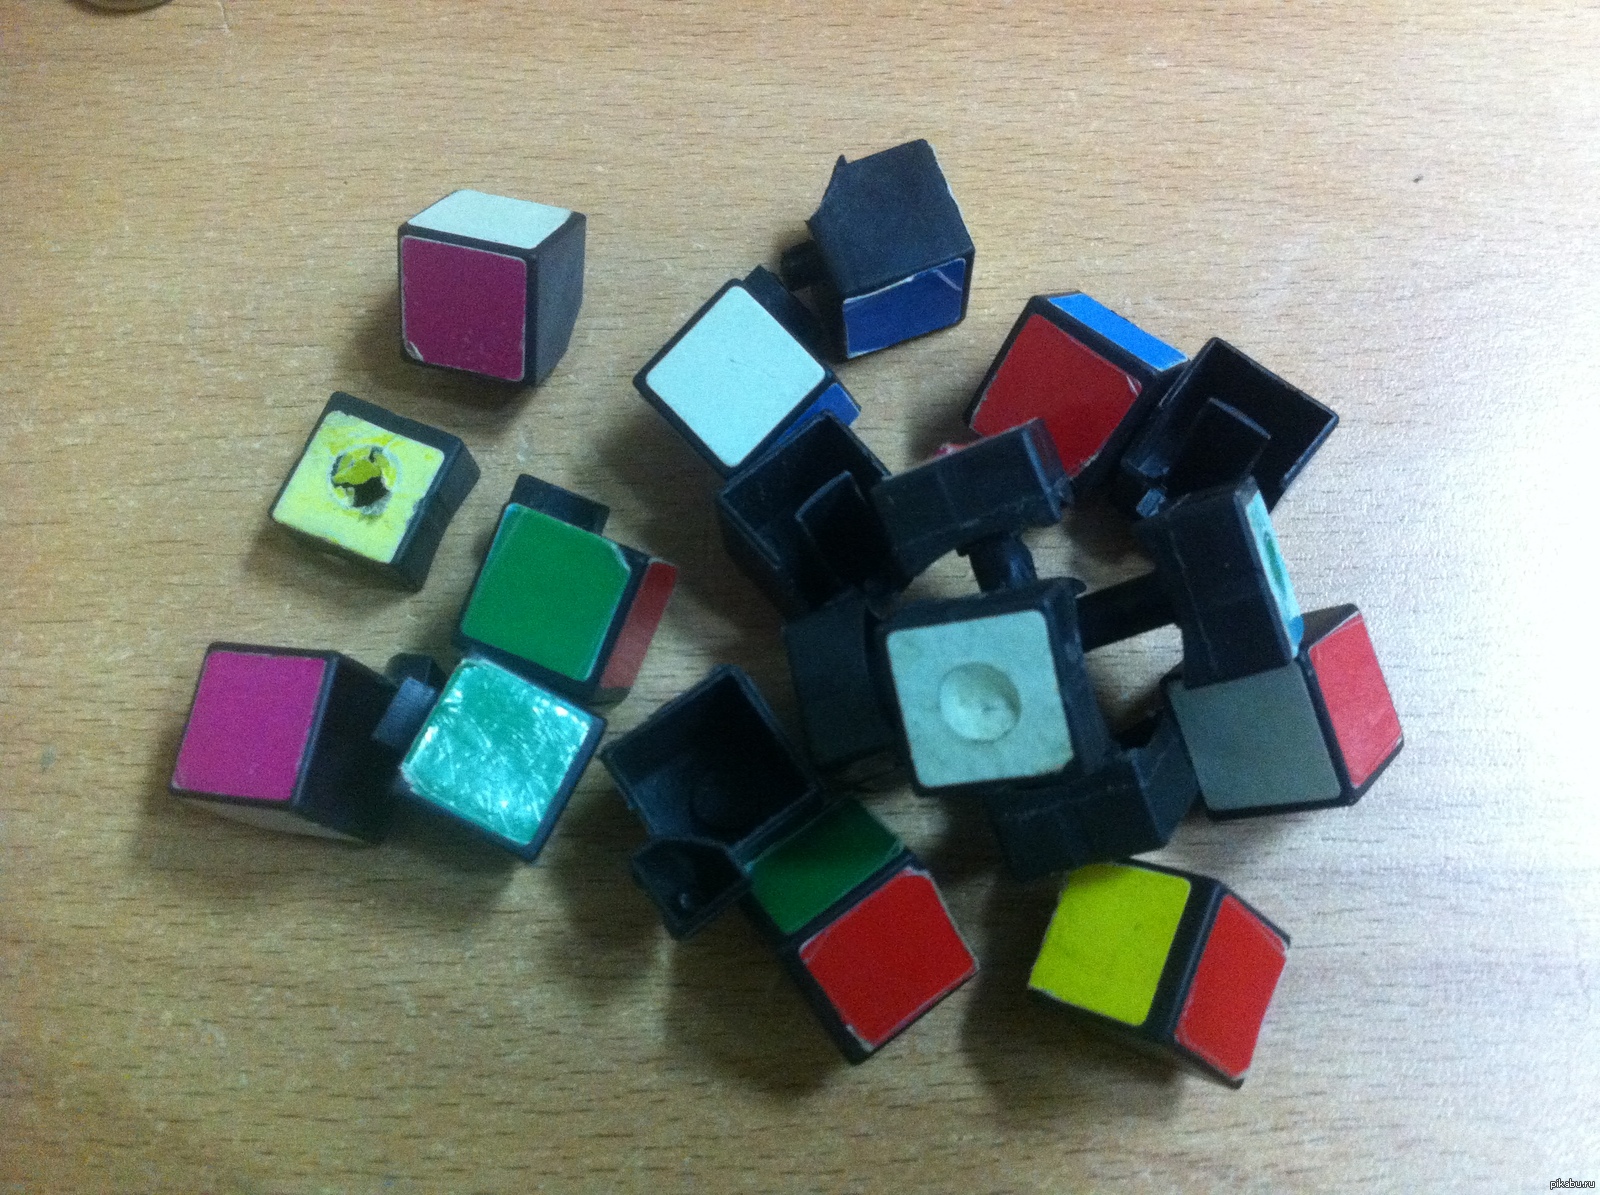 Головоломка разбери кубик. Разобранный кубик Рубика 3х3. Сломанный кубик Рубика 3х3. Разногранный ЕУБИР Рубика. Кубик Рубика разобранный на части.